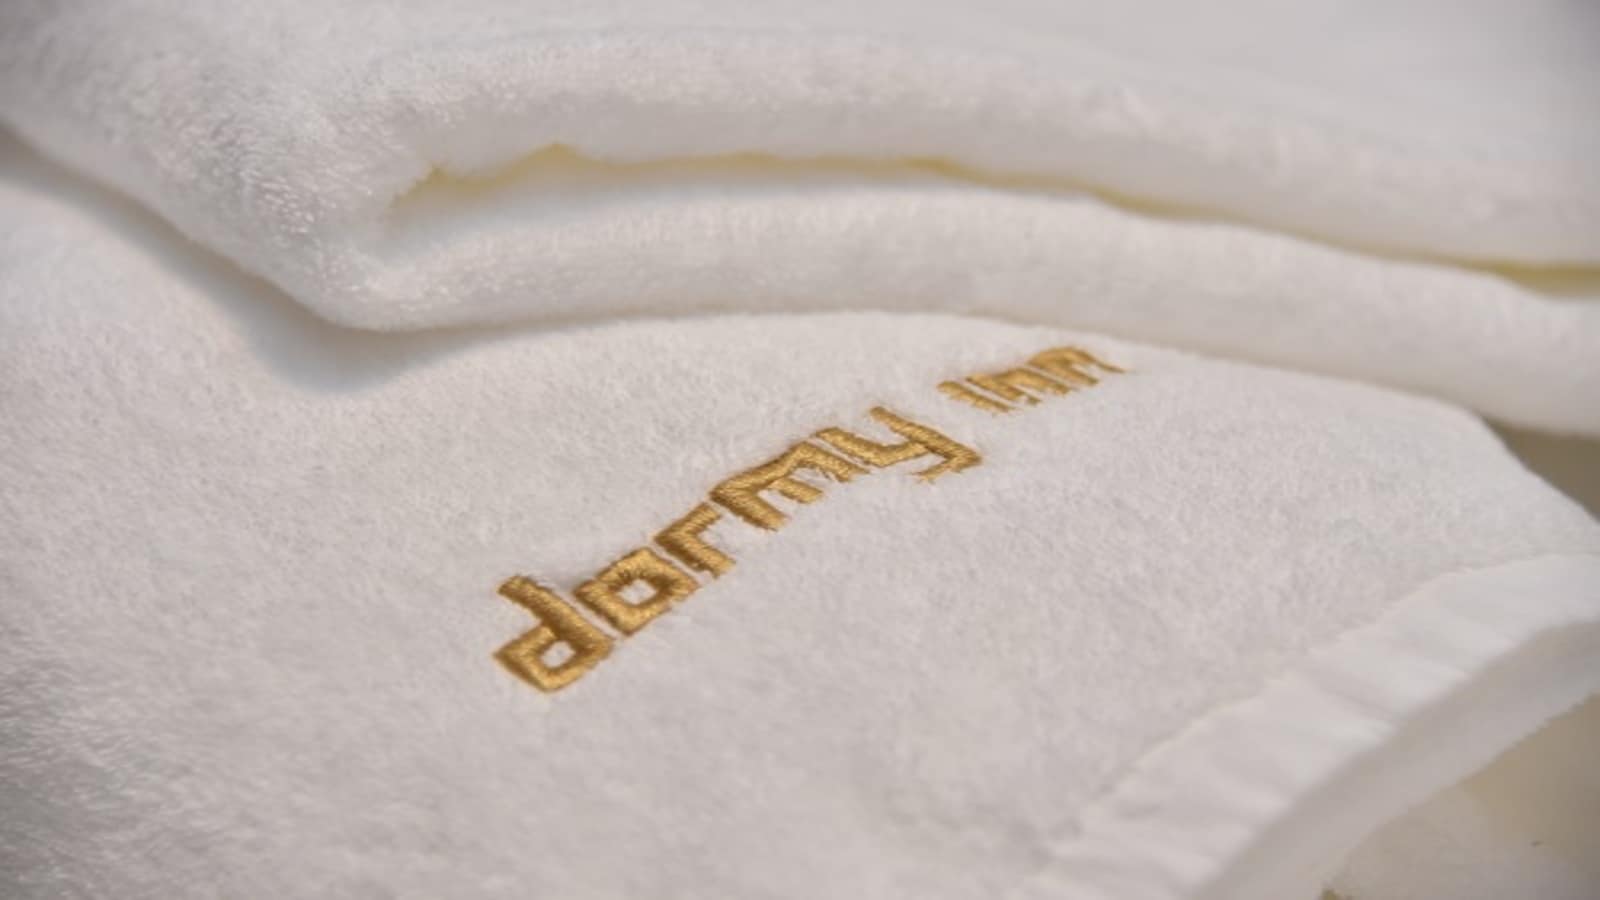 ◆ Room equipment freshly washed! Fluffy towel